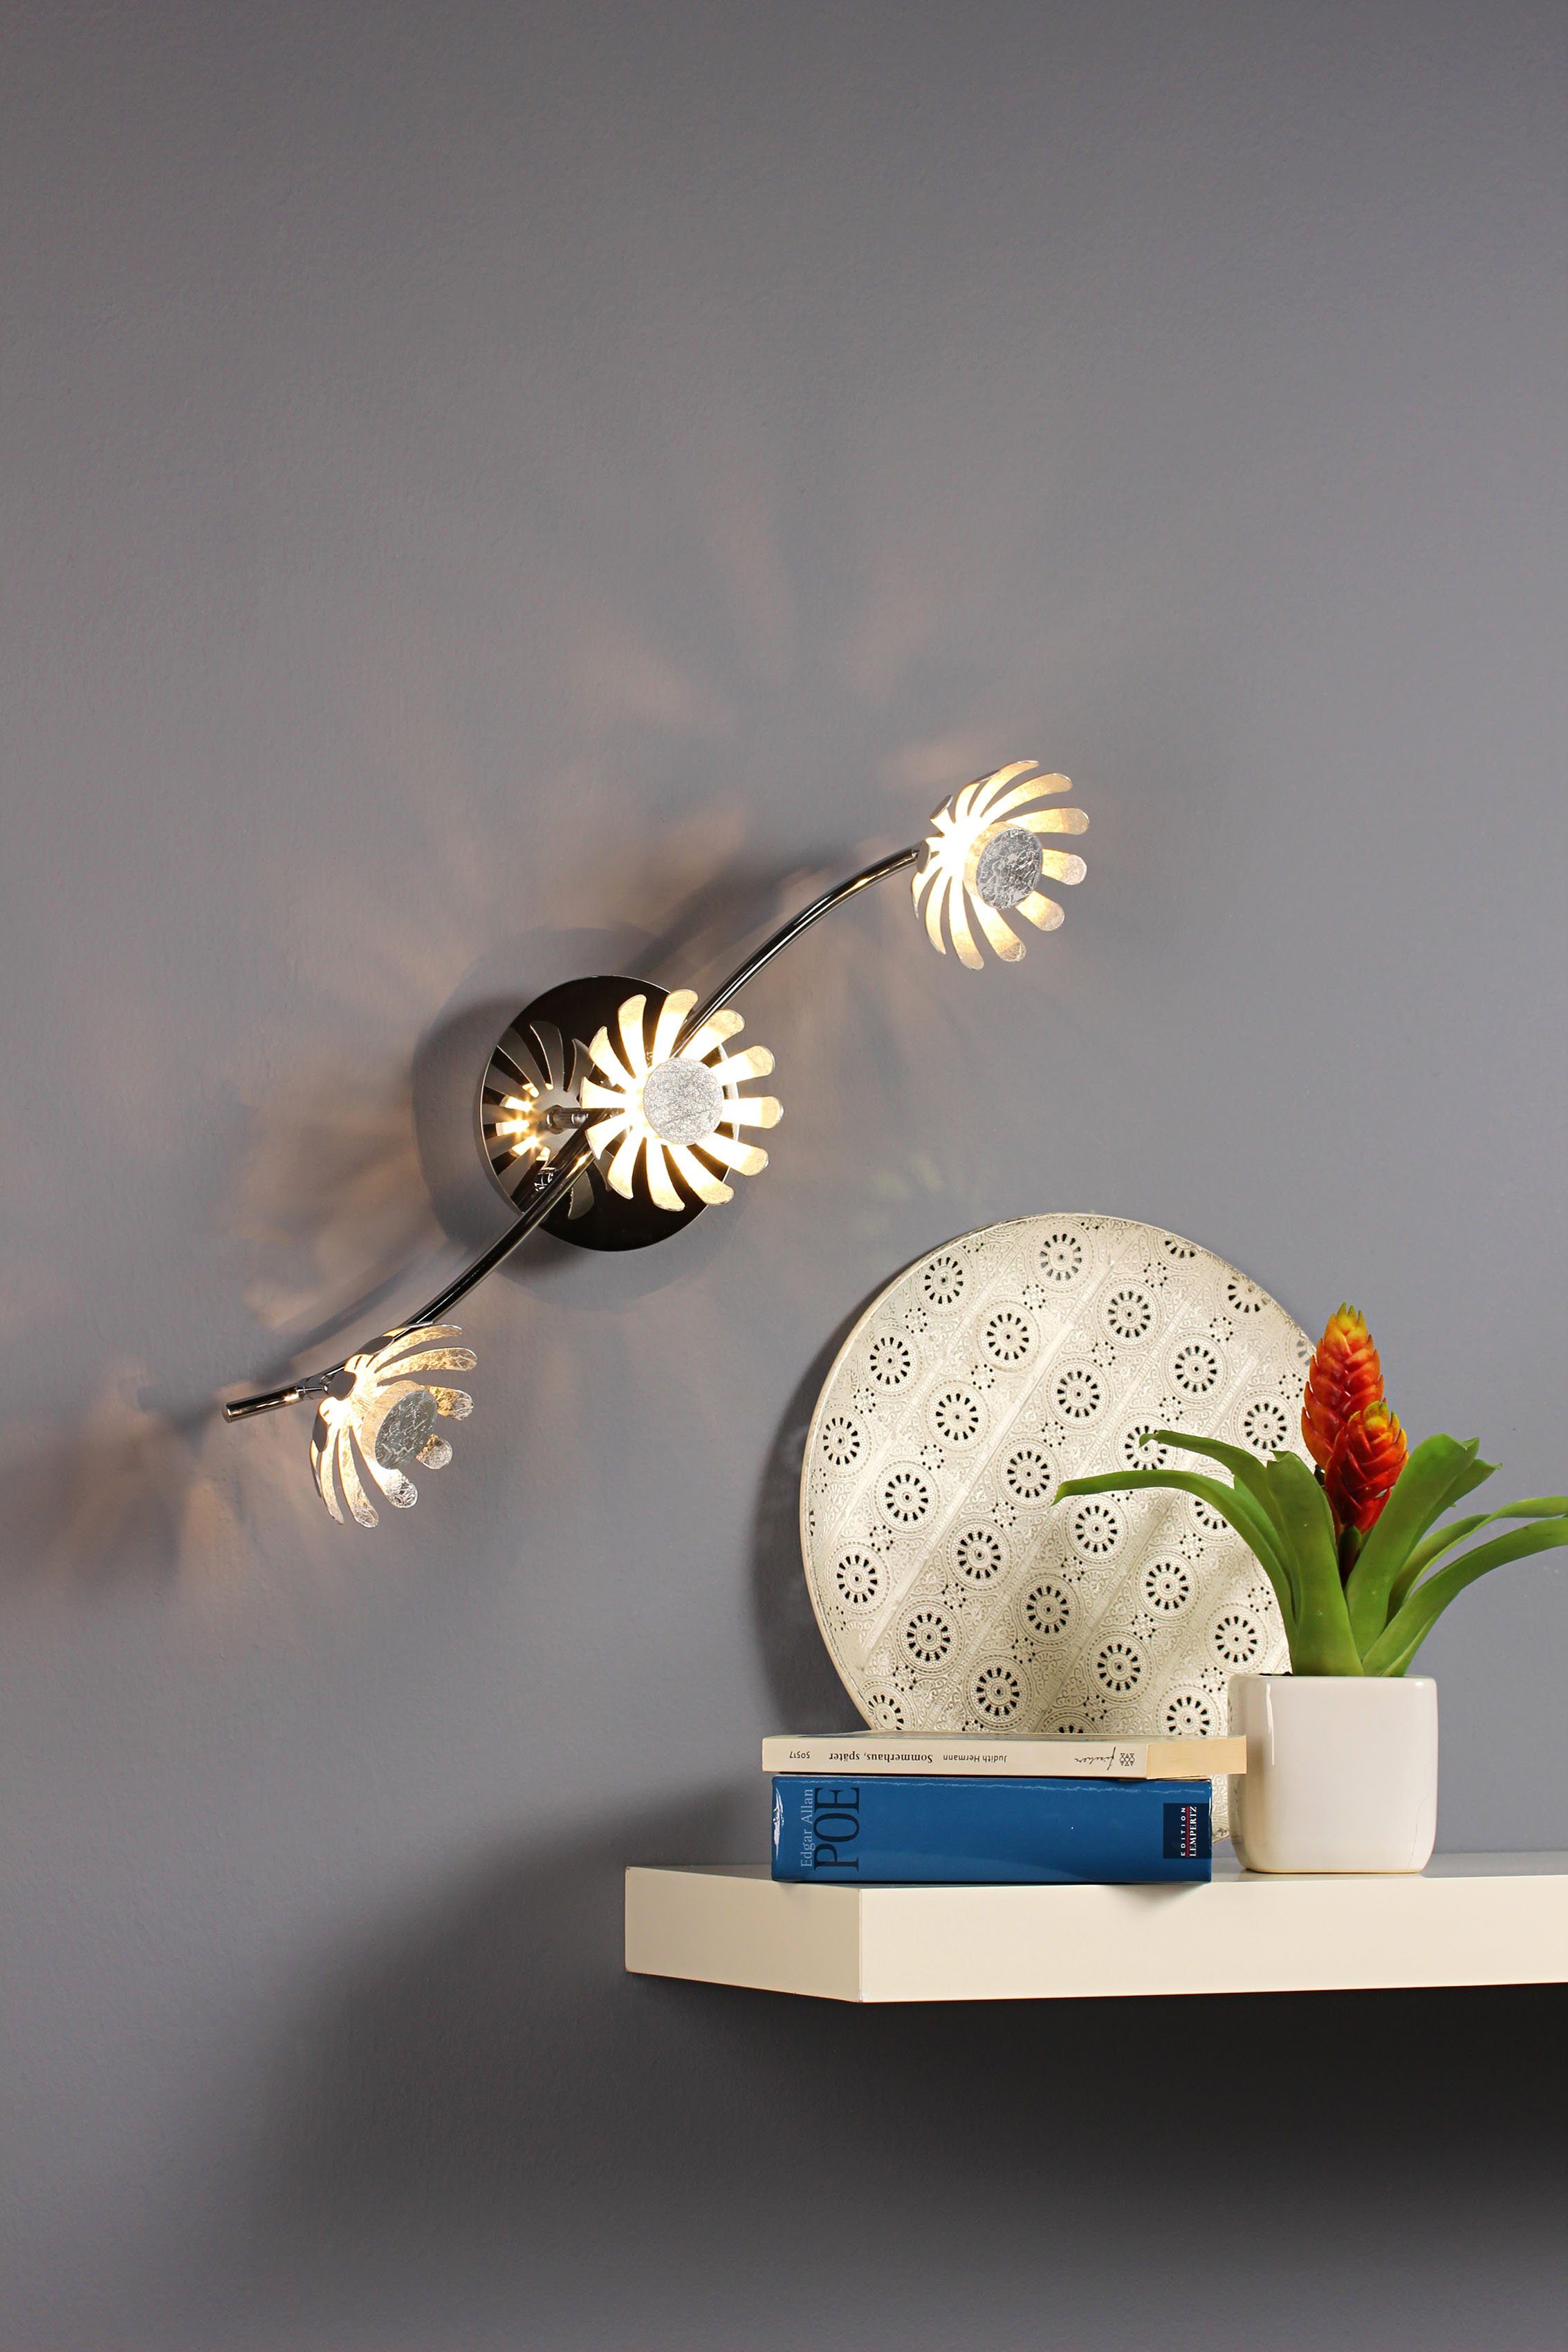 Bloom, fest integriert, Design Warmweiß LED Deckenleuchte LED LUCE